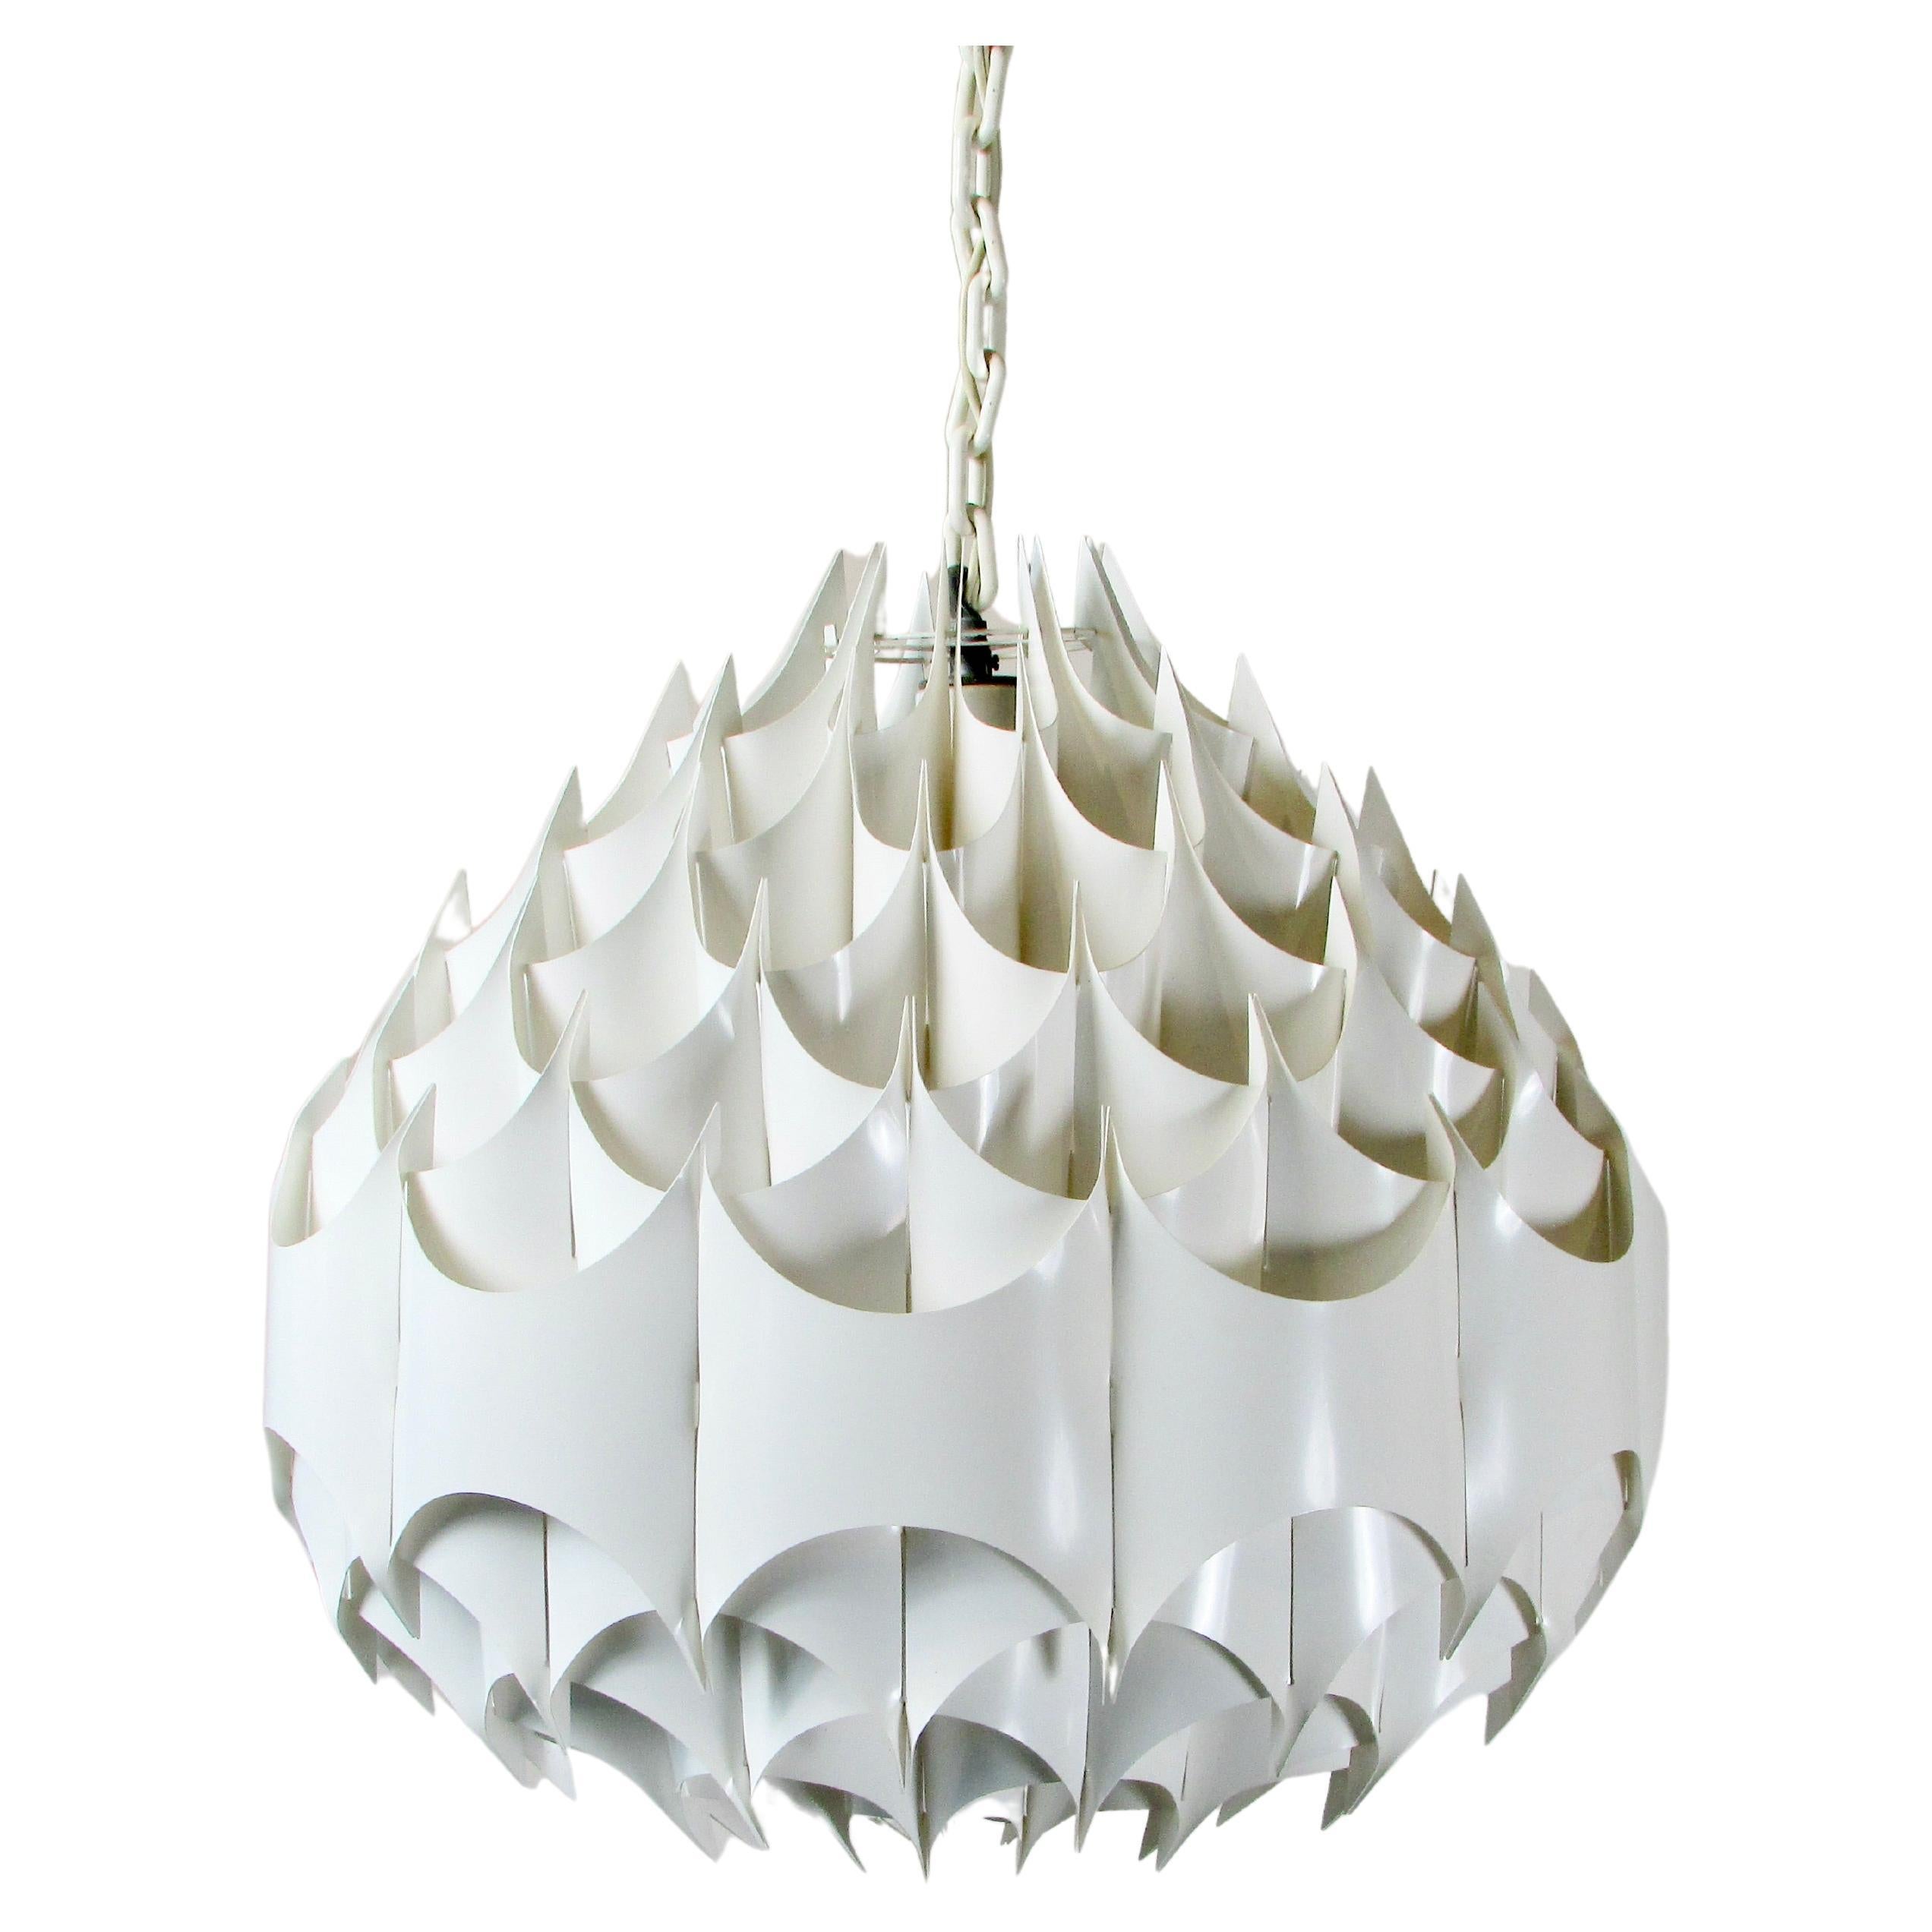 Milanda Havlova for Vest Austria white Acrylic globe hanging pendant lamp For Sale